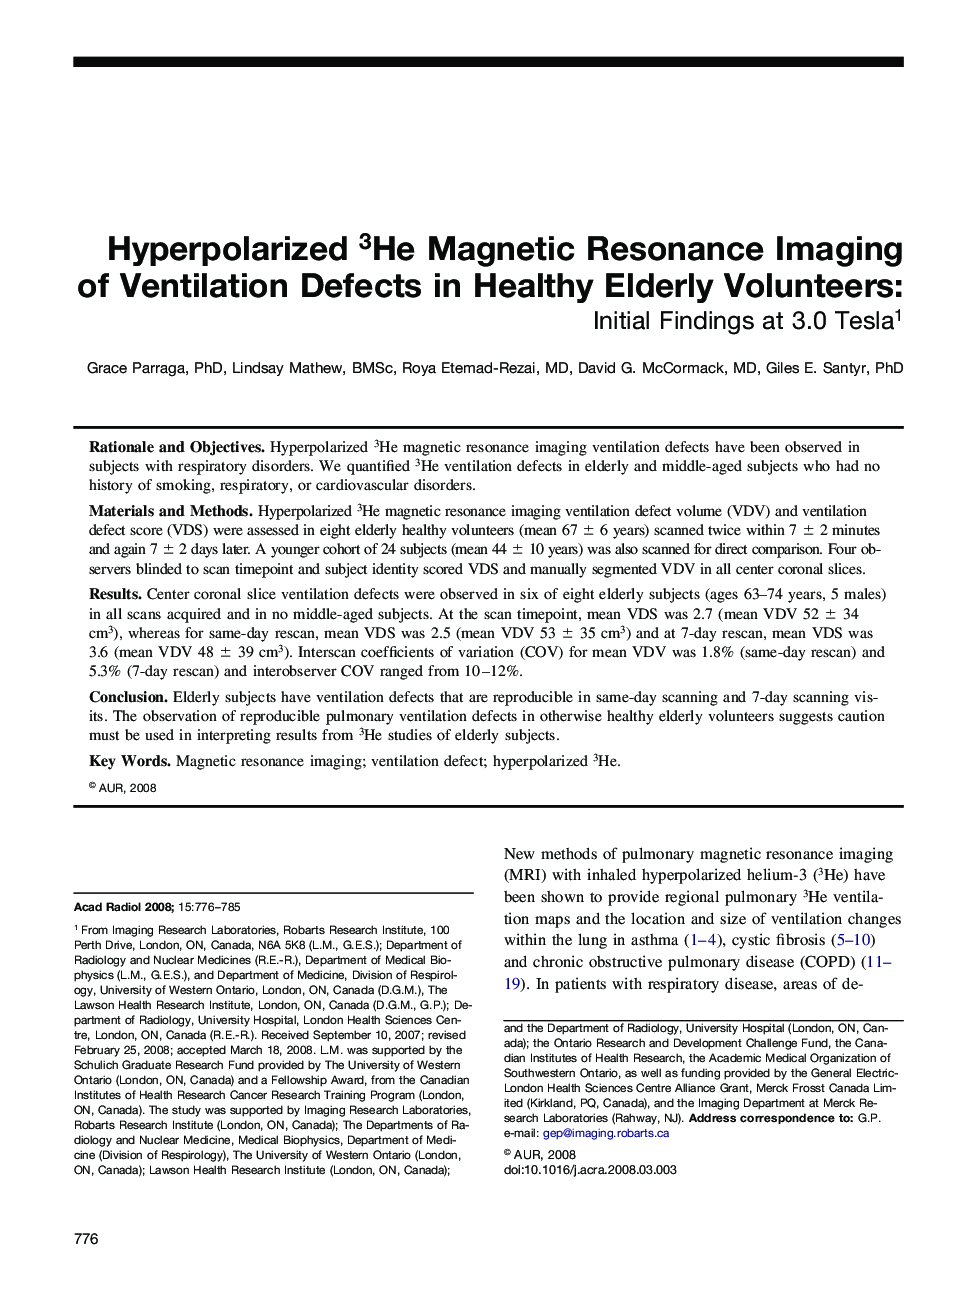 Hyperpolarized 3He Magnetic Resonance Imaging of Ventilation Defects in Healthy Elderly Volunteers